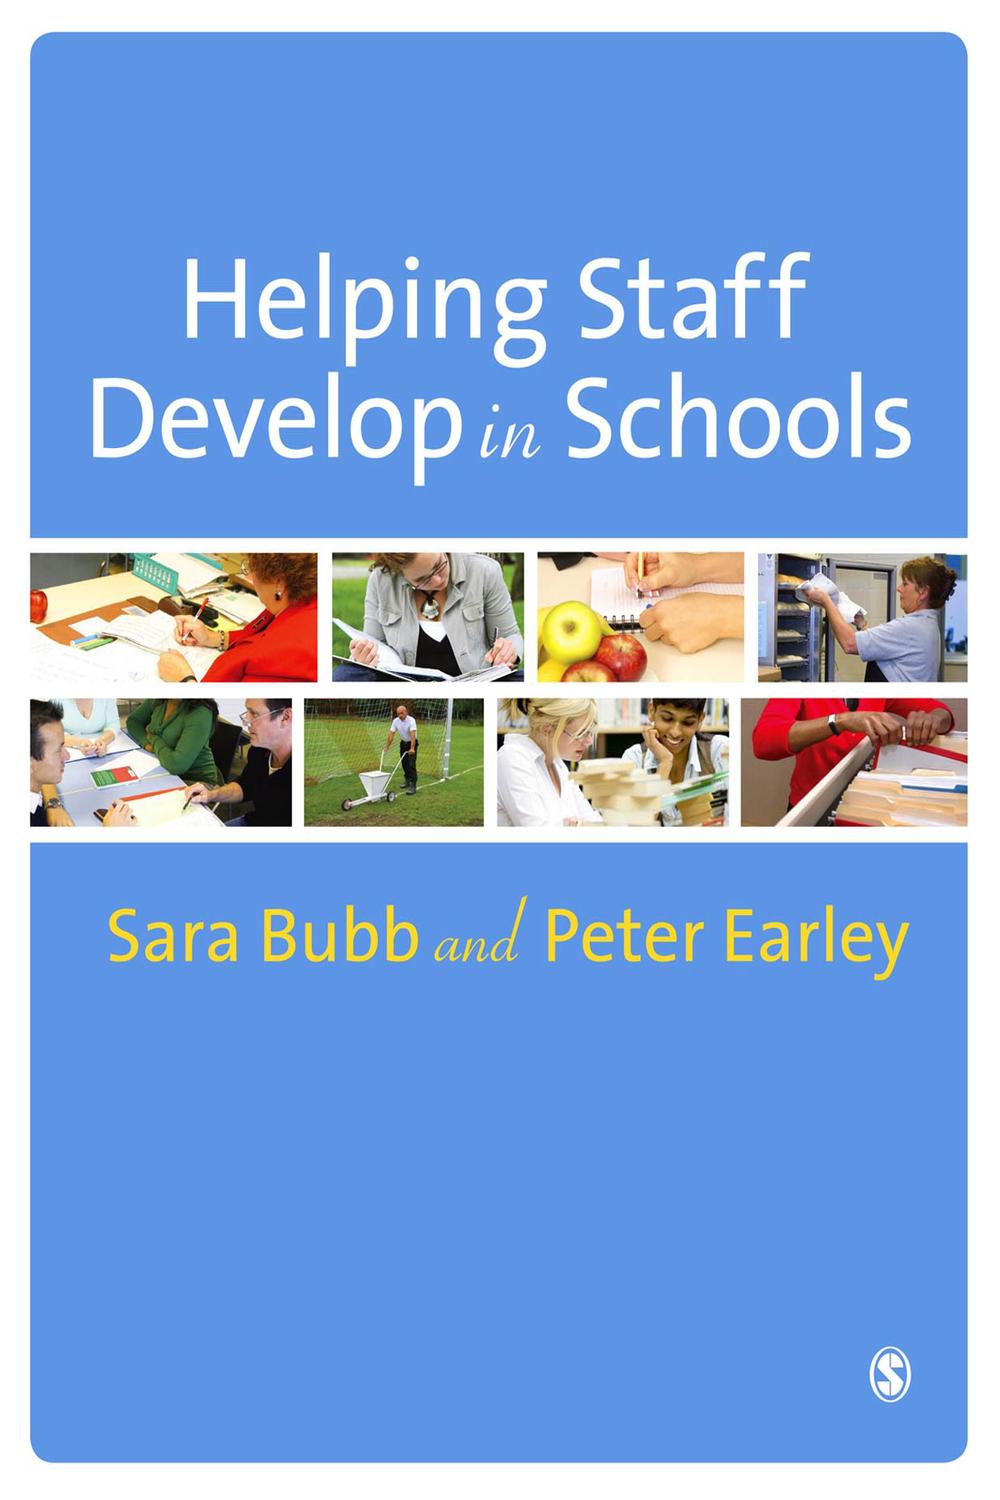 Helping Staff Develop in Schools - Sara Bubb, Peter Earley